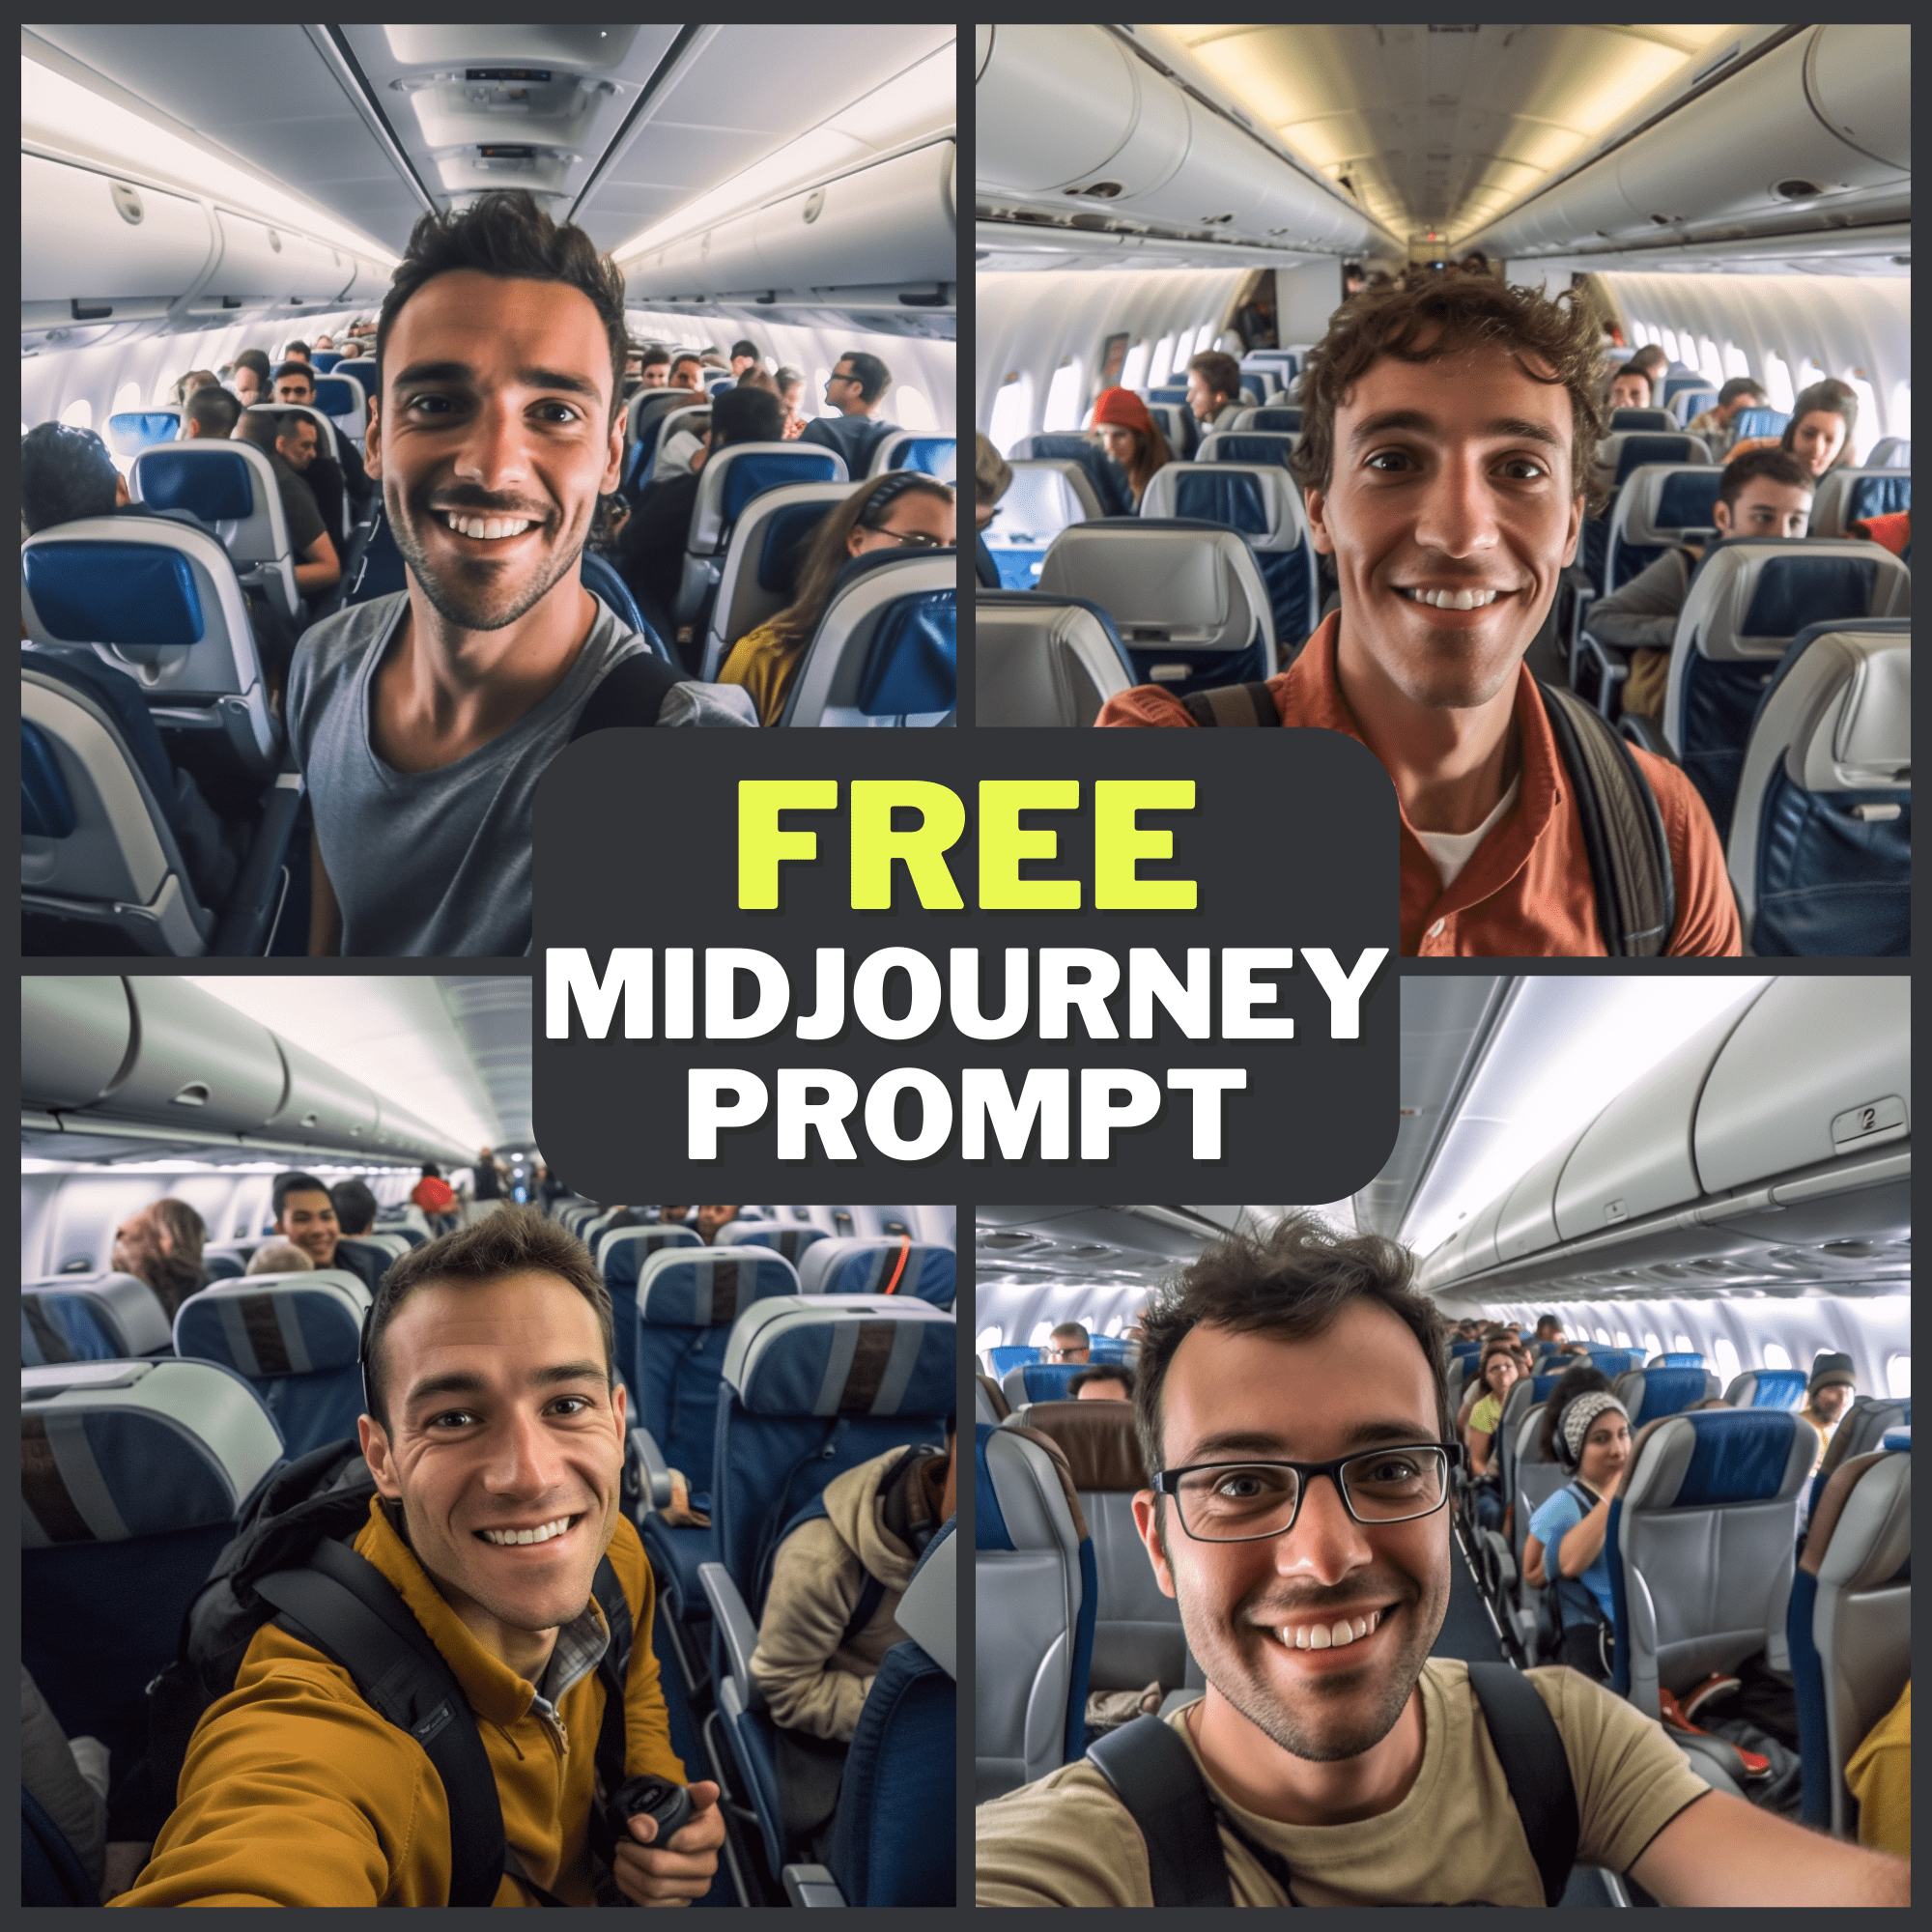 Selfie Inside Plane Free Midjourney Prompt 1 